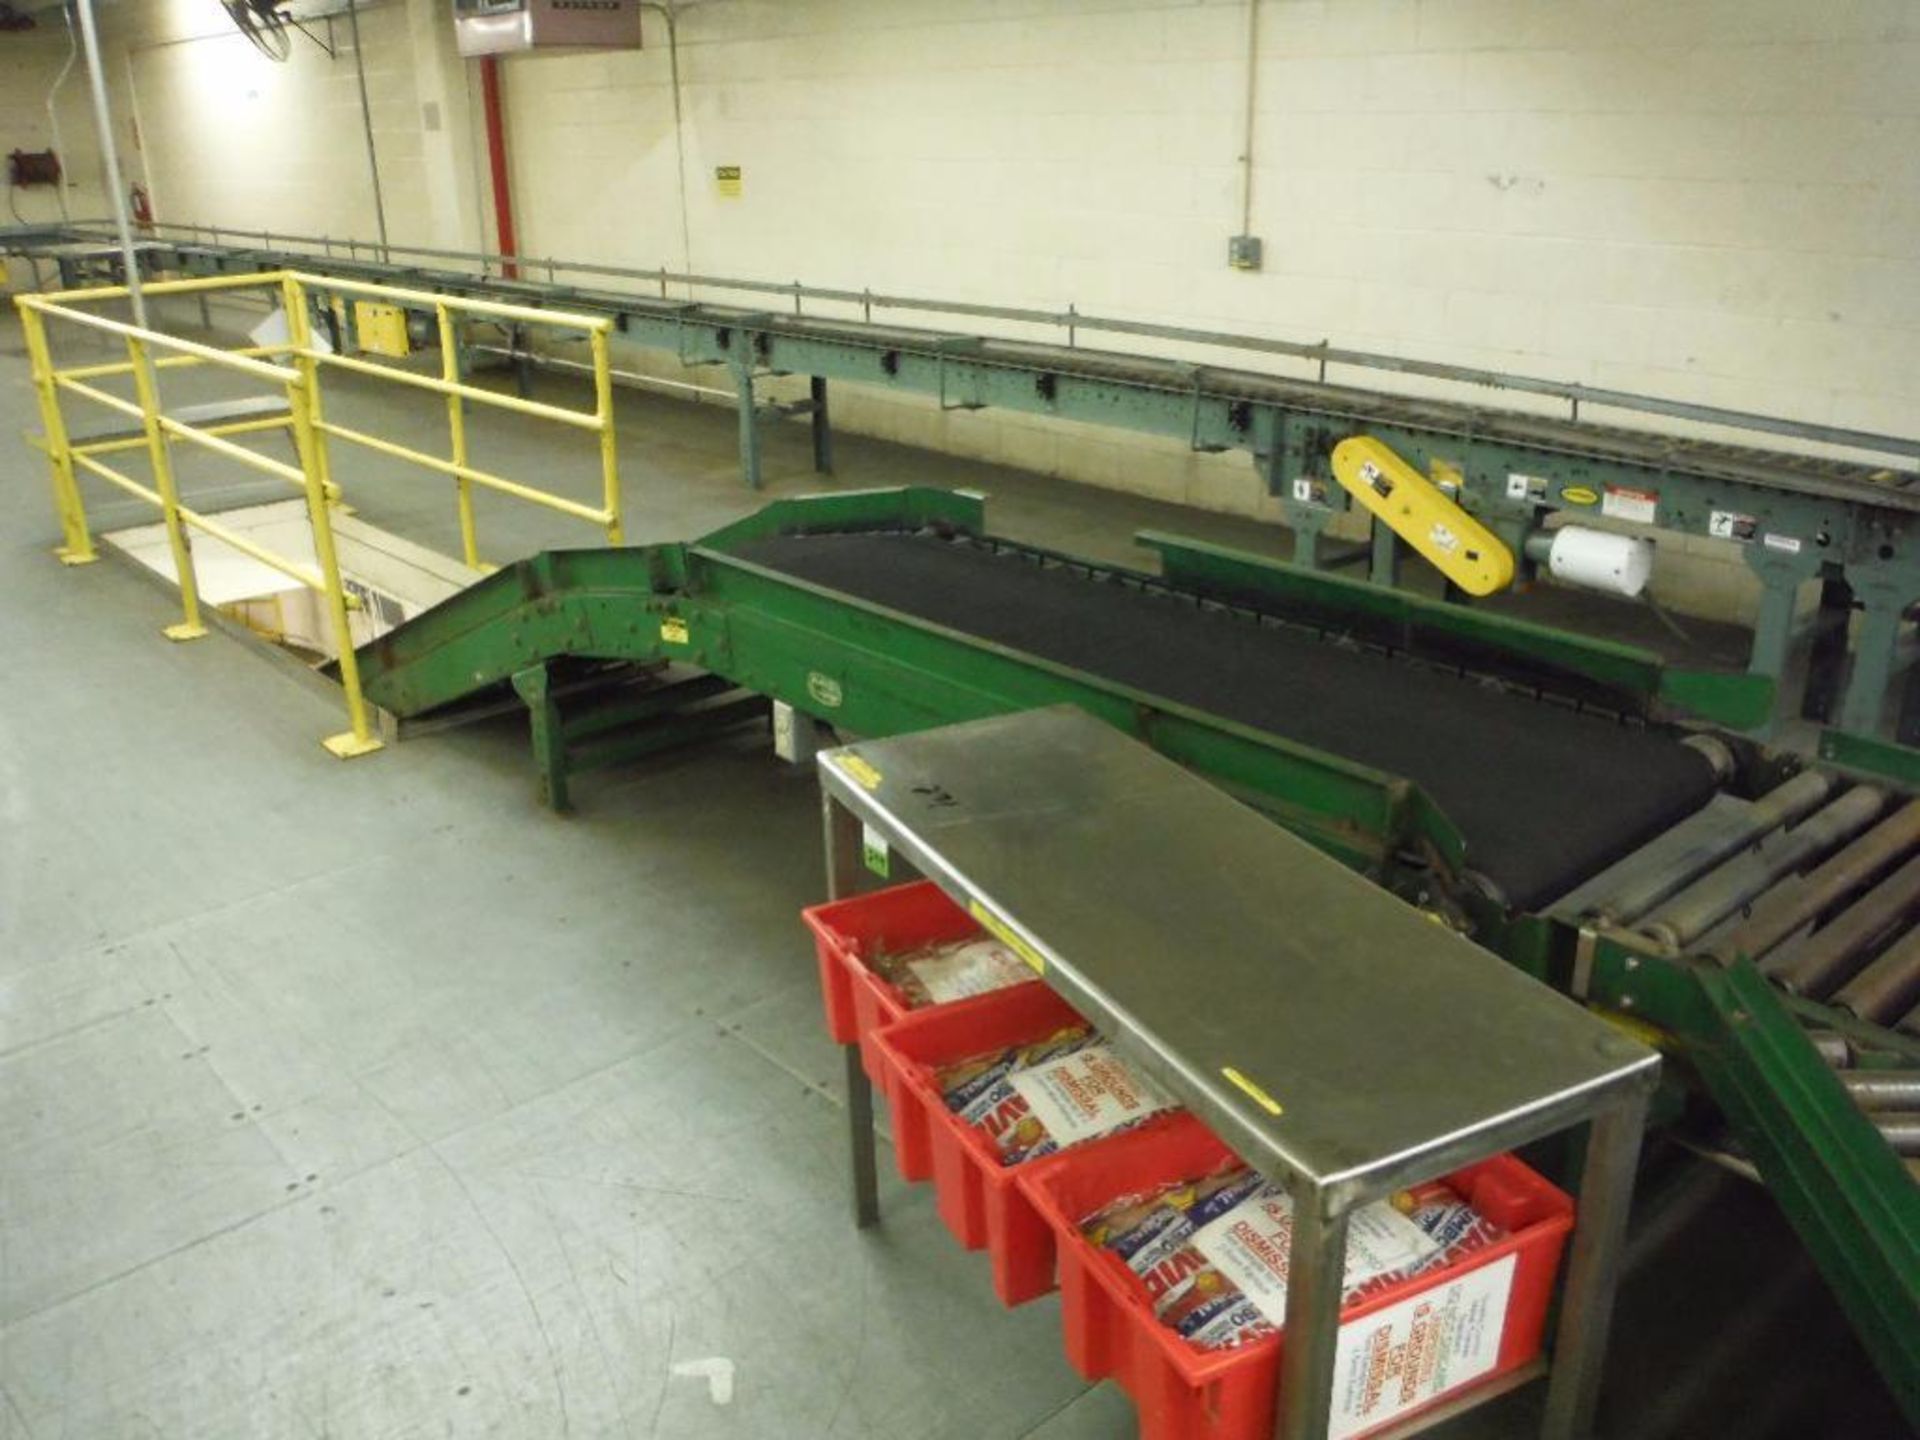 Uniflo decline rubber belt conveyor, 24 ft. long x 24 in. wide, motor and drive, mild steel frame,